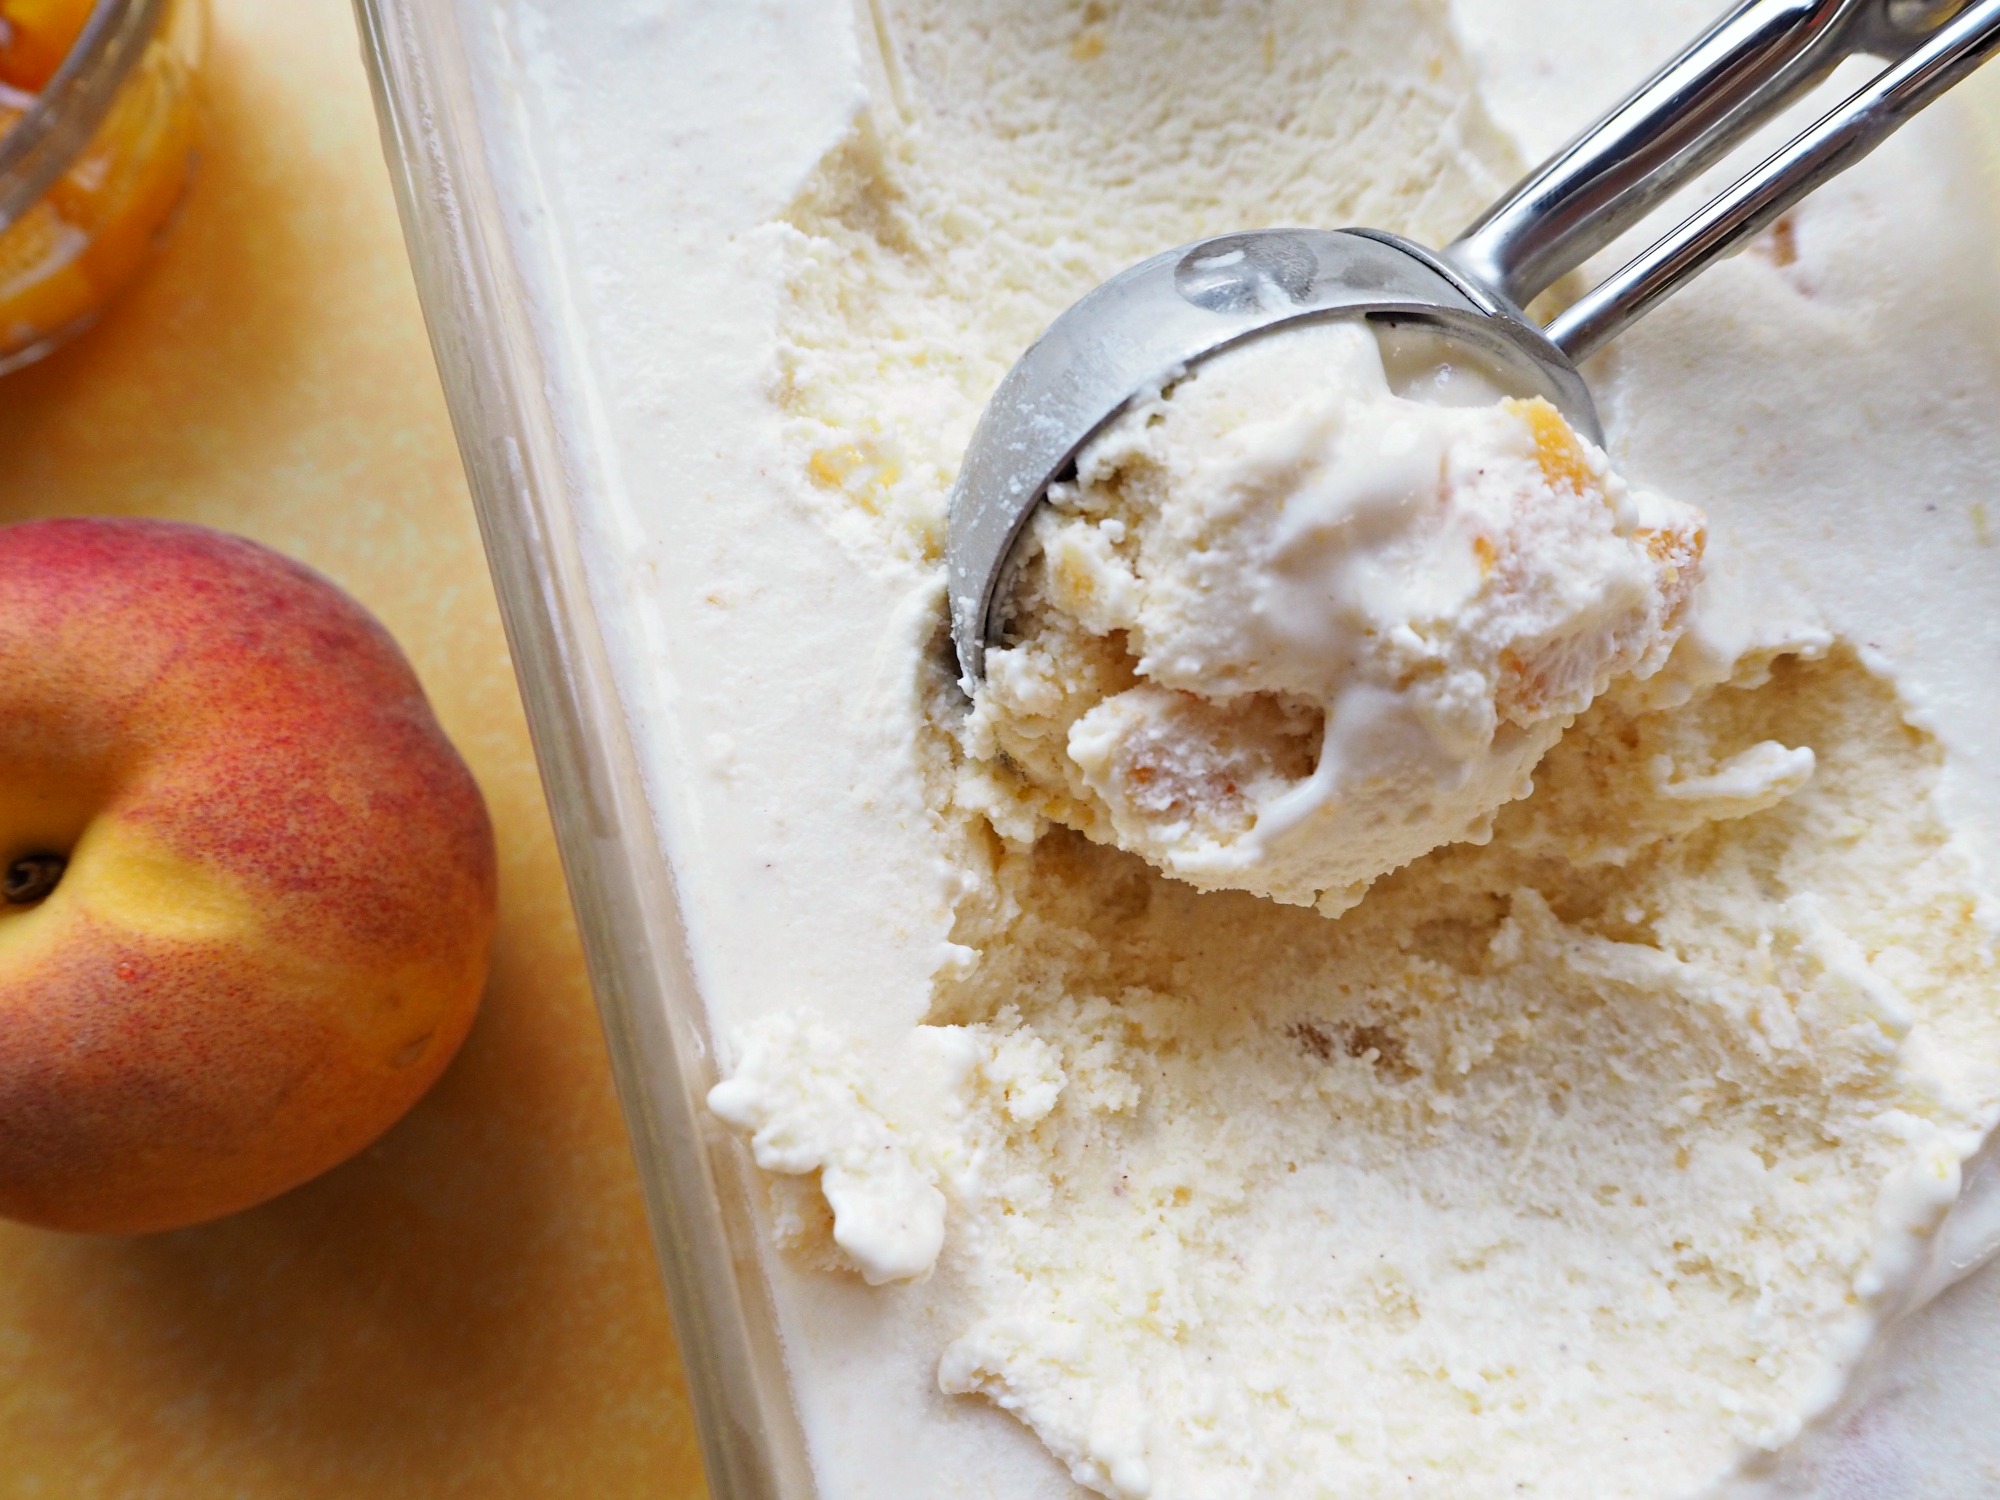 An ice cream scoop in a tub of homemade peach ice cream